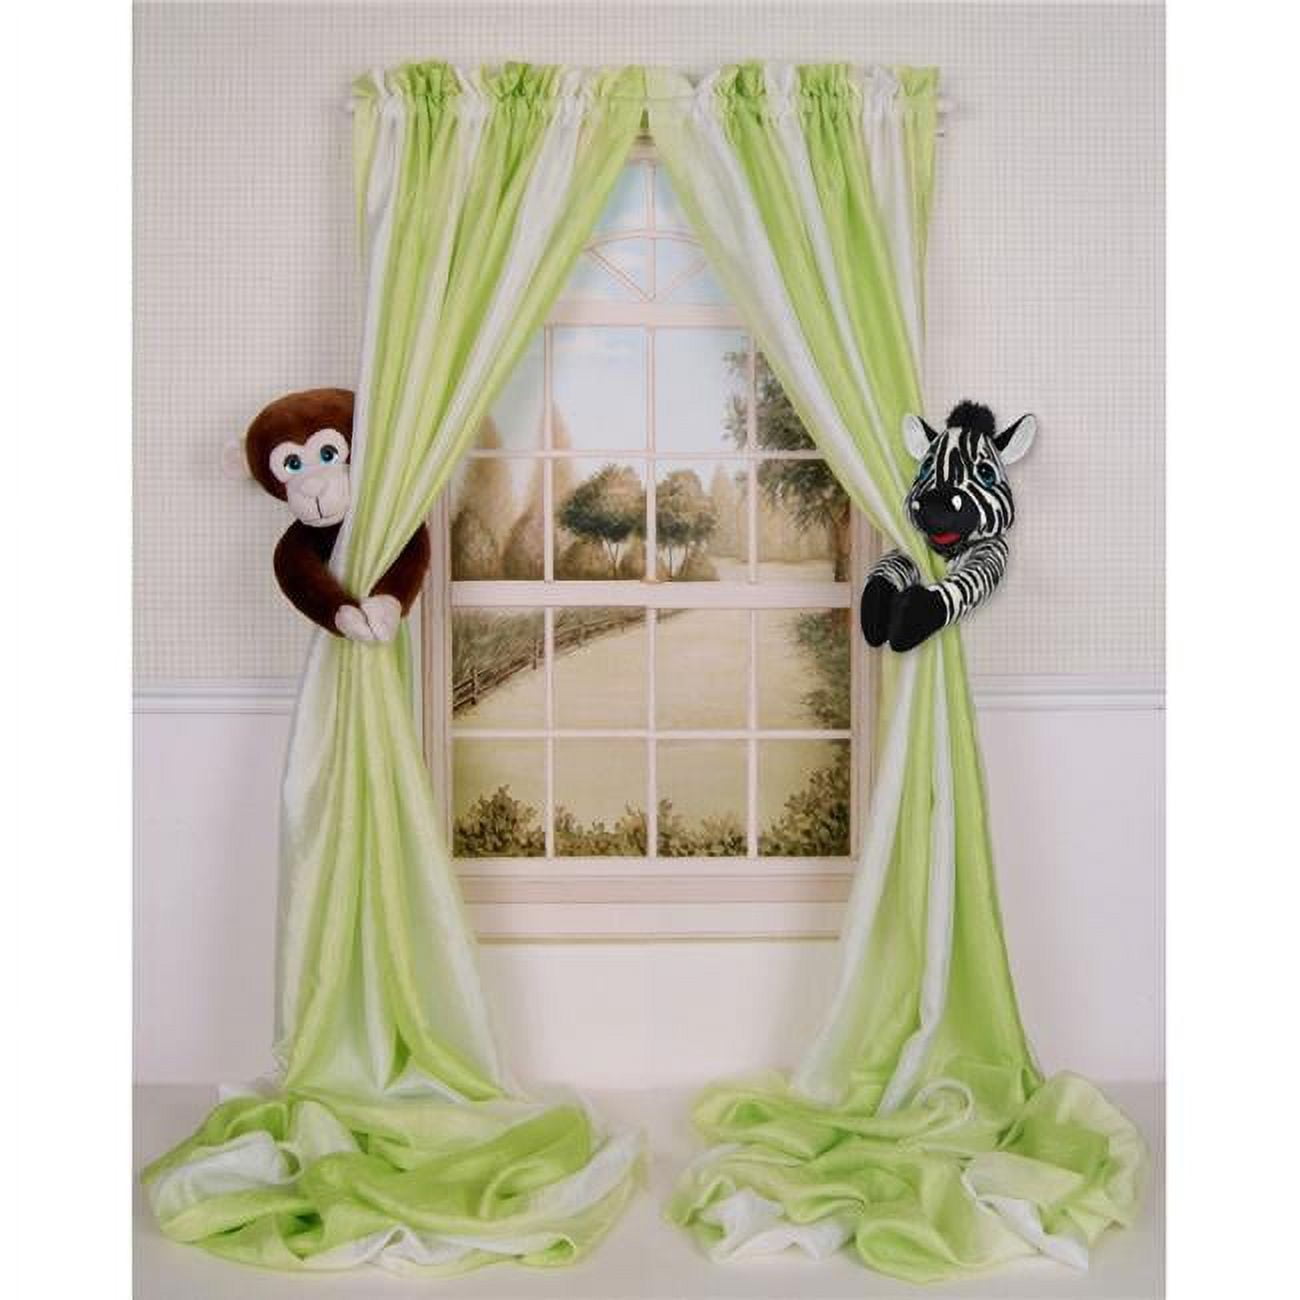 Picture of Curtain Critters ALMYZB490213COL Plush Safari Chocolate Monkey & Zebra Curtain Tieback Collector Set - Chocolate Brown&#44; Black & White